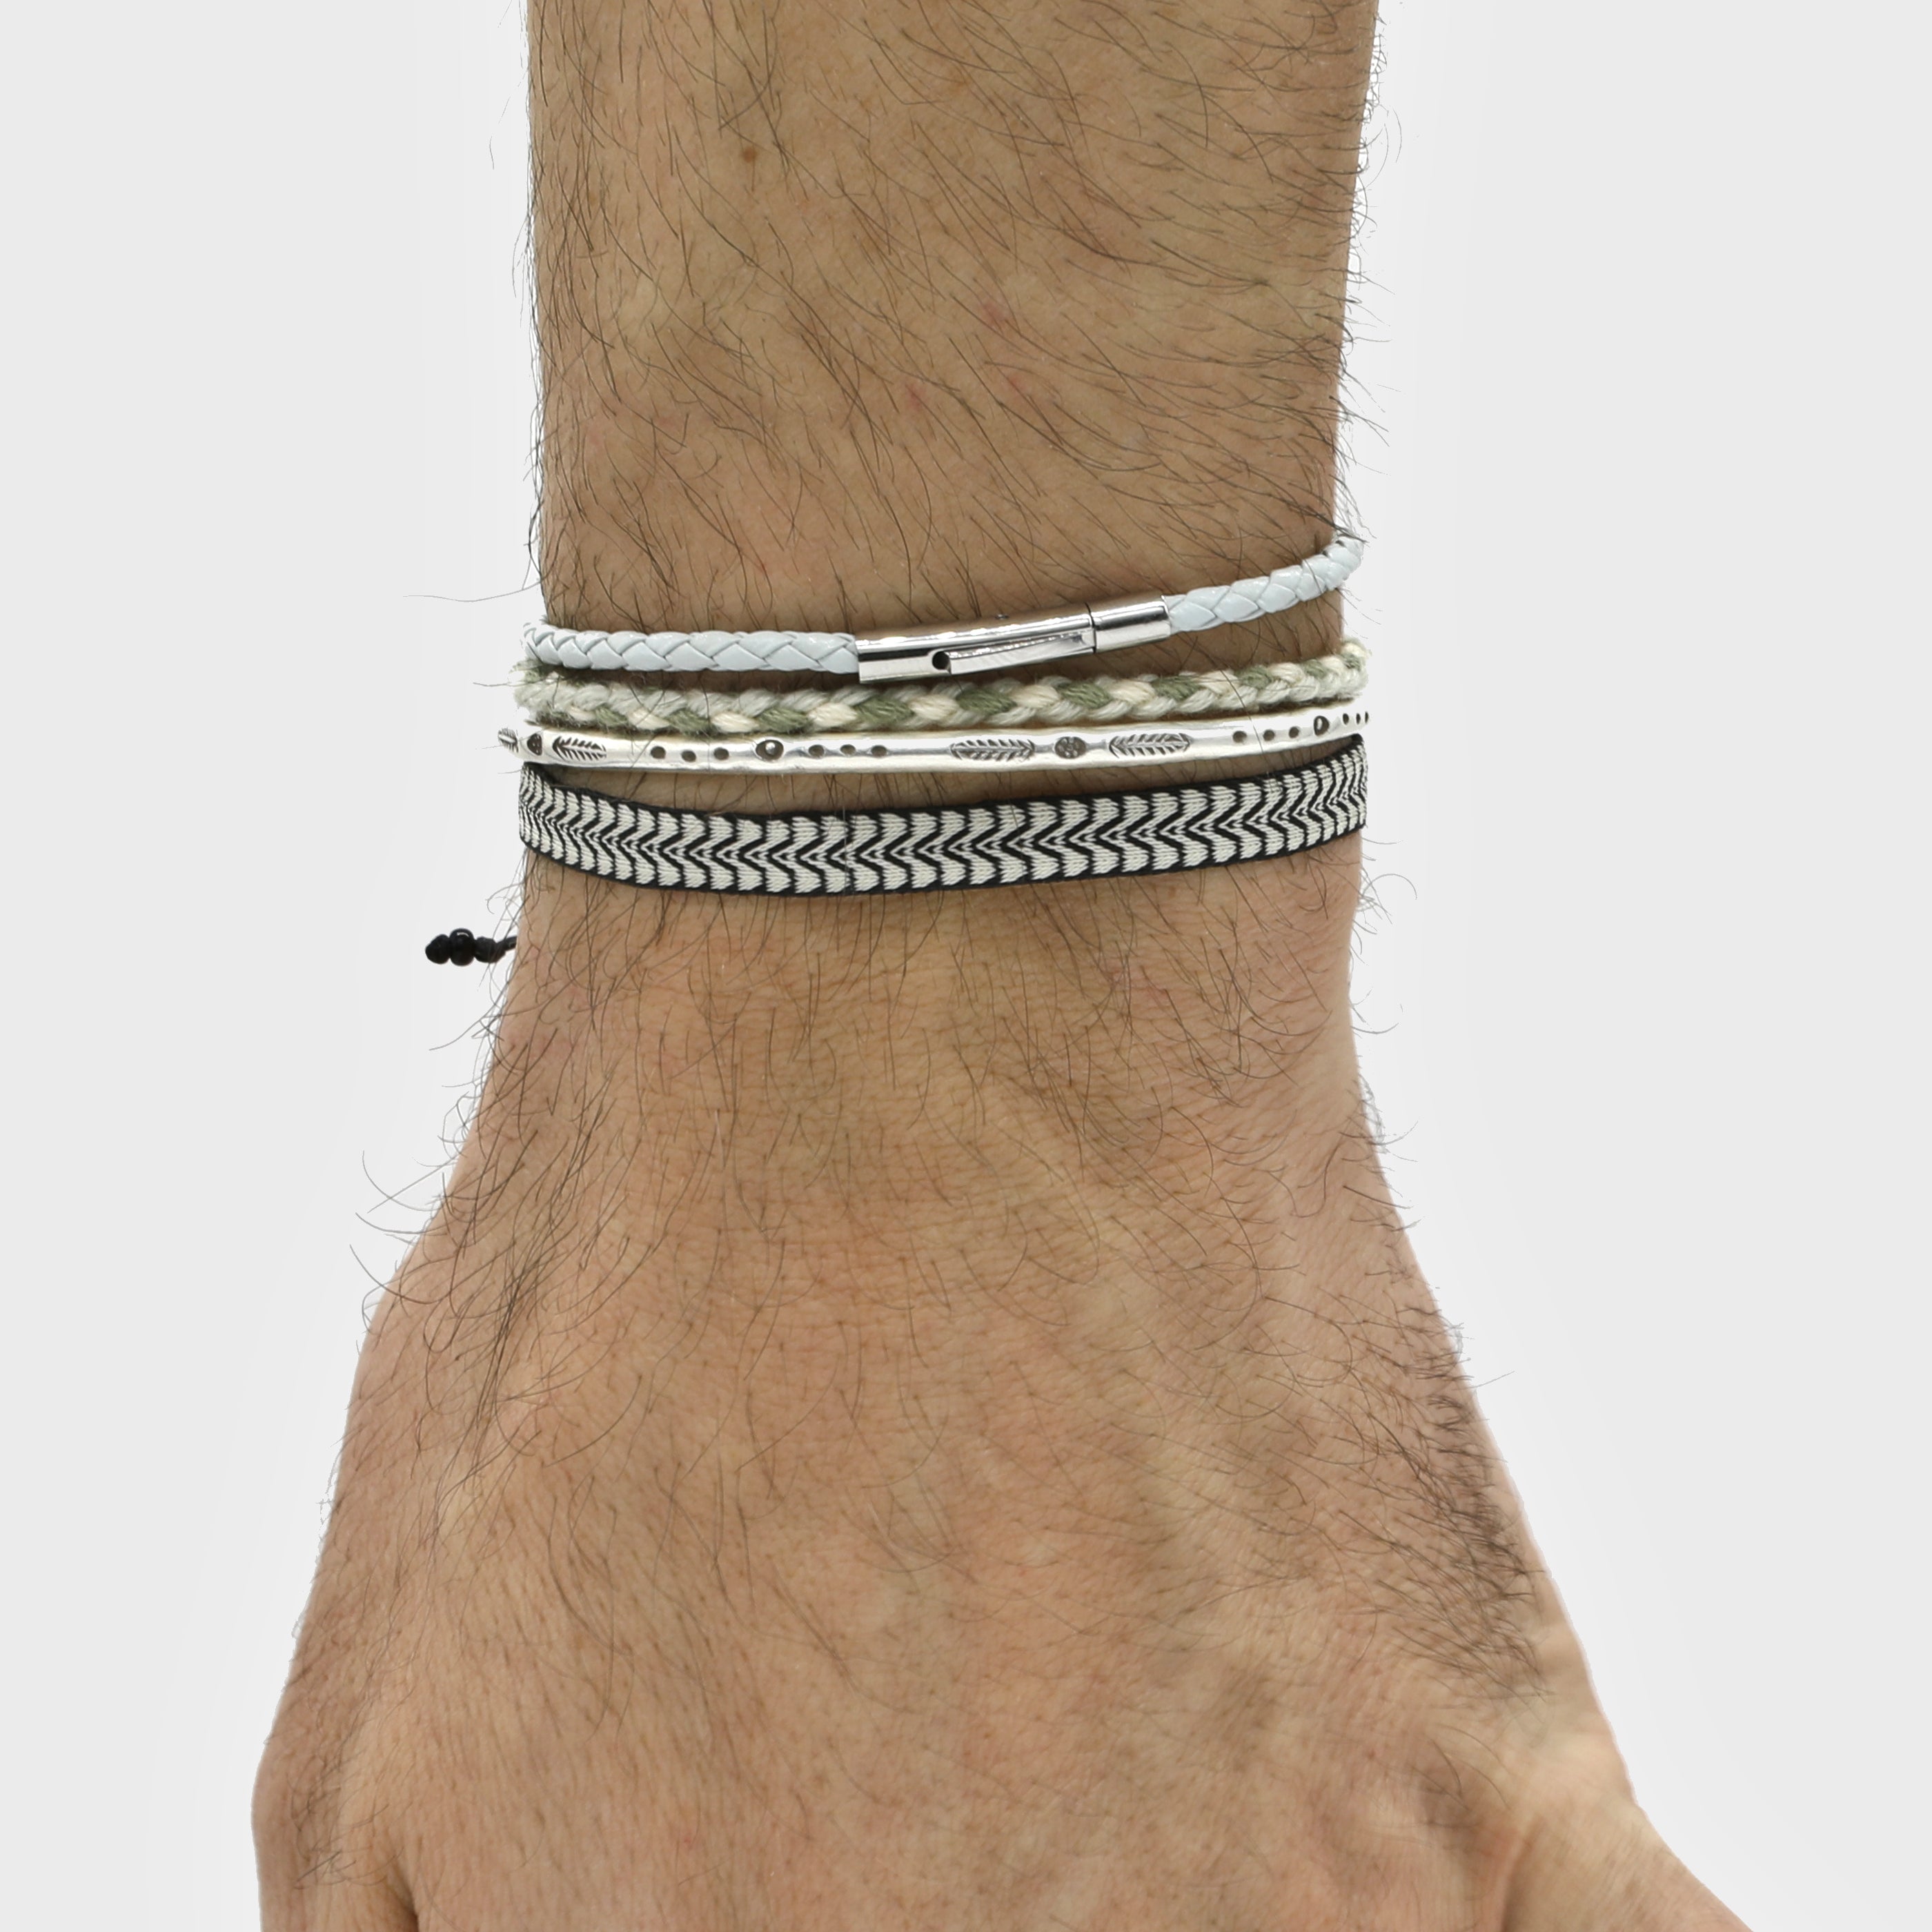 3mm Italian Leather Bracelet With Silver Clasp (Light Grey)-Jewelry-Kompsós